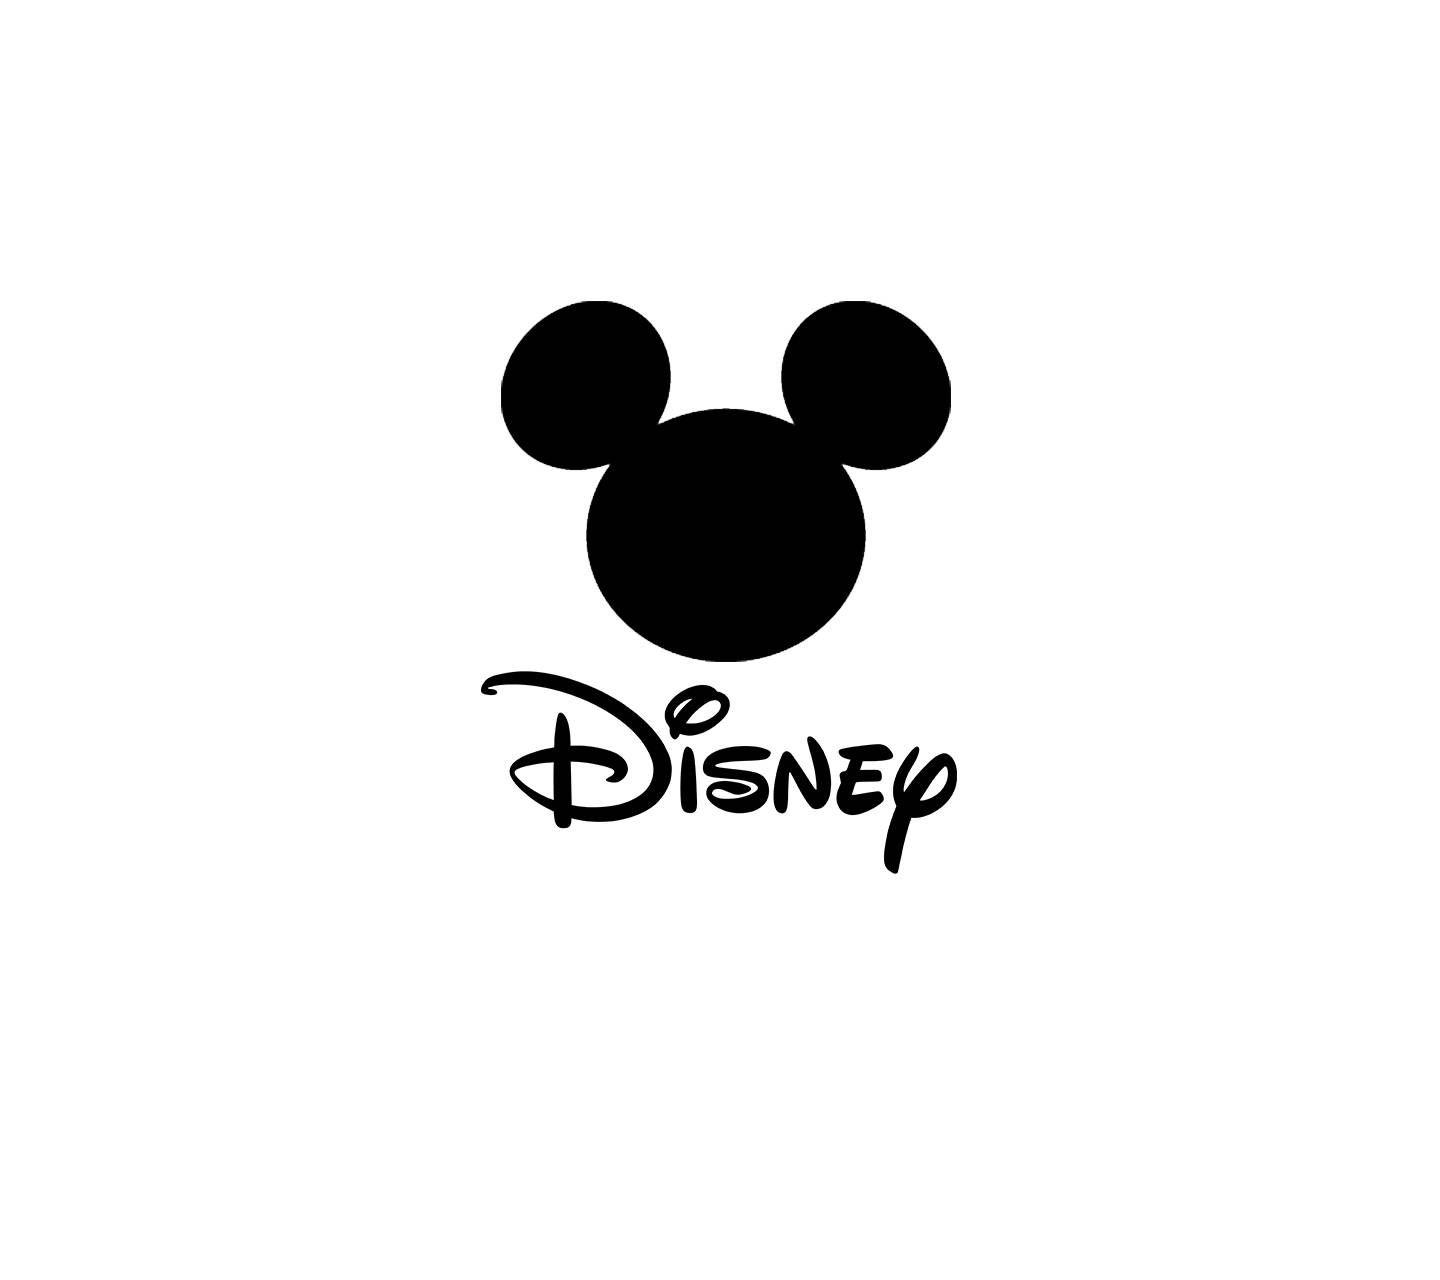 Dysney Logo - Disney Logo White Wallpaper by NeoMystic - 17 - Free on ZEDGE™